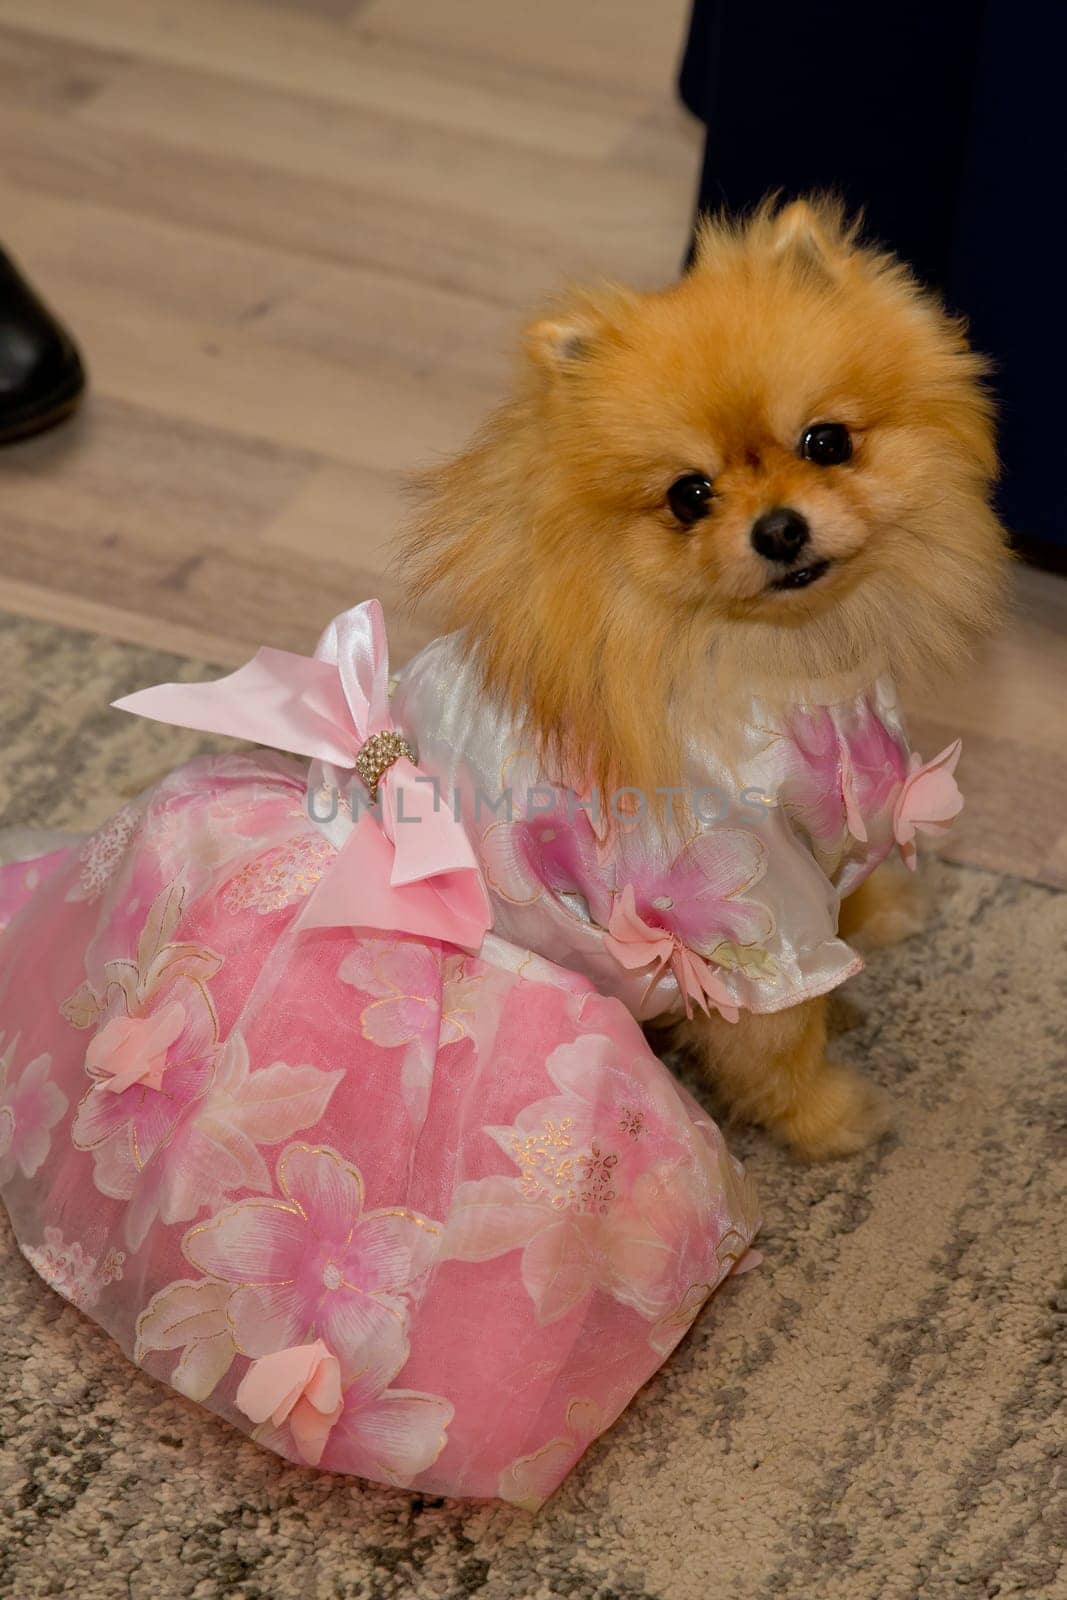 Small Spitz dog in a wedding dress.